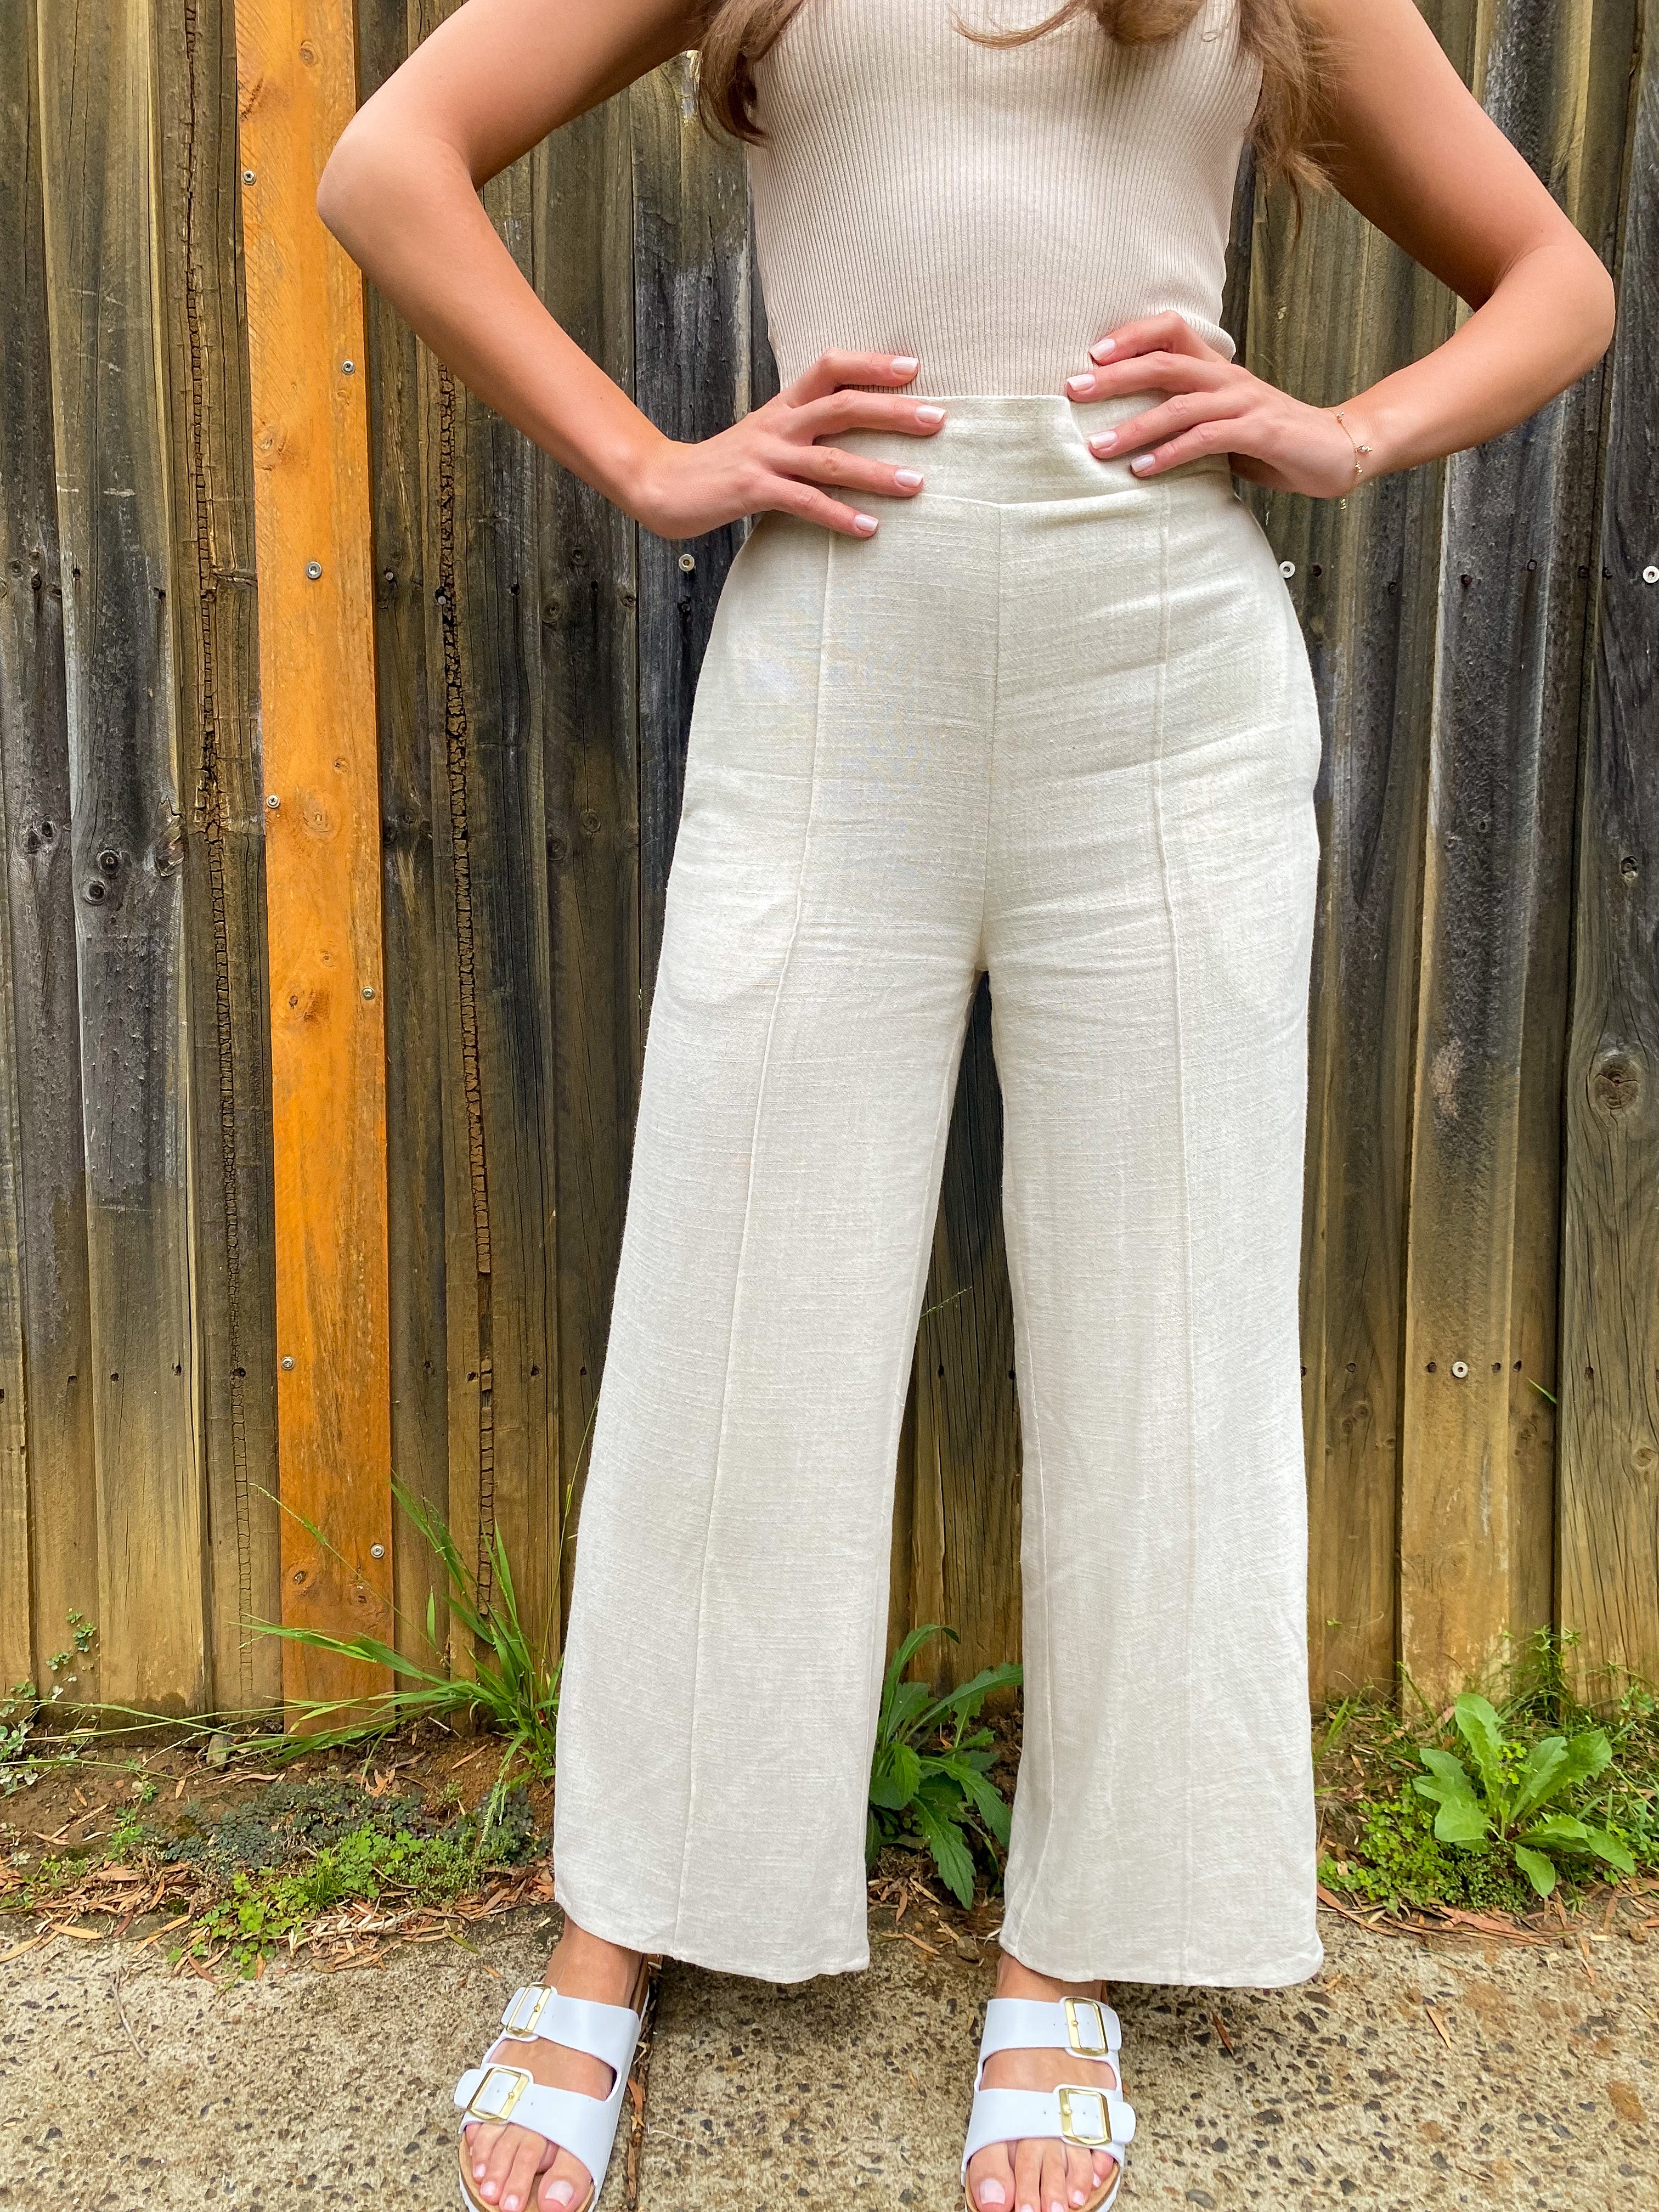 Stylish linen pants